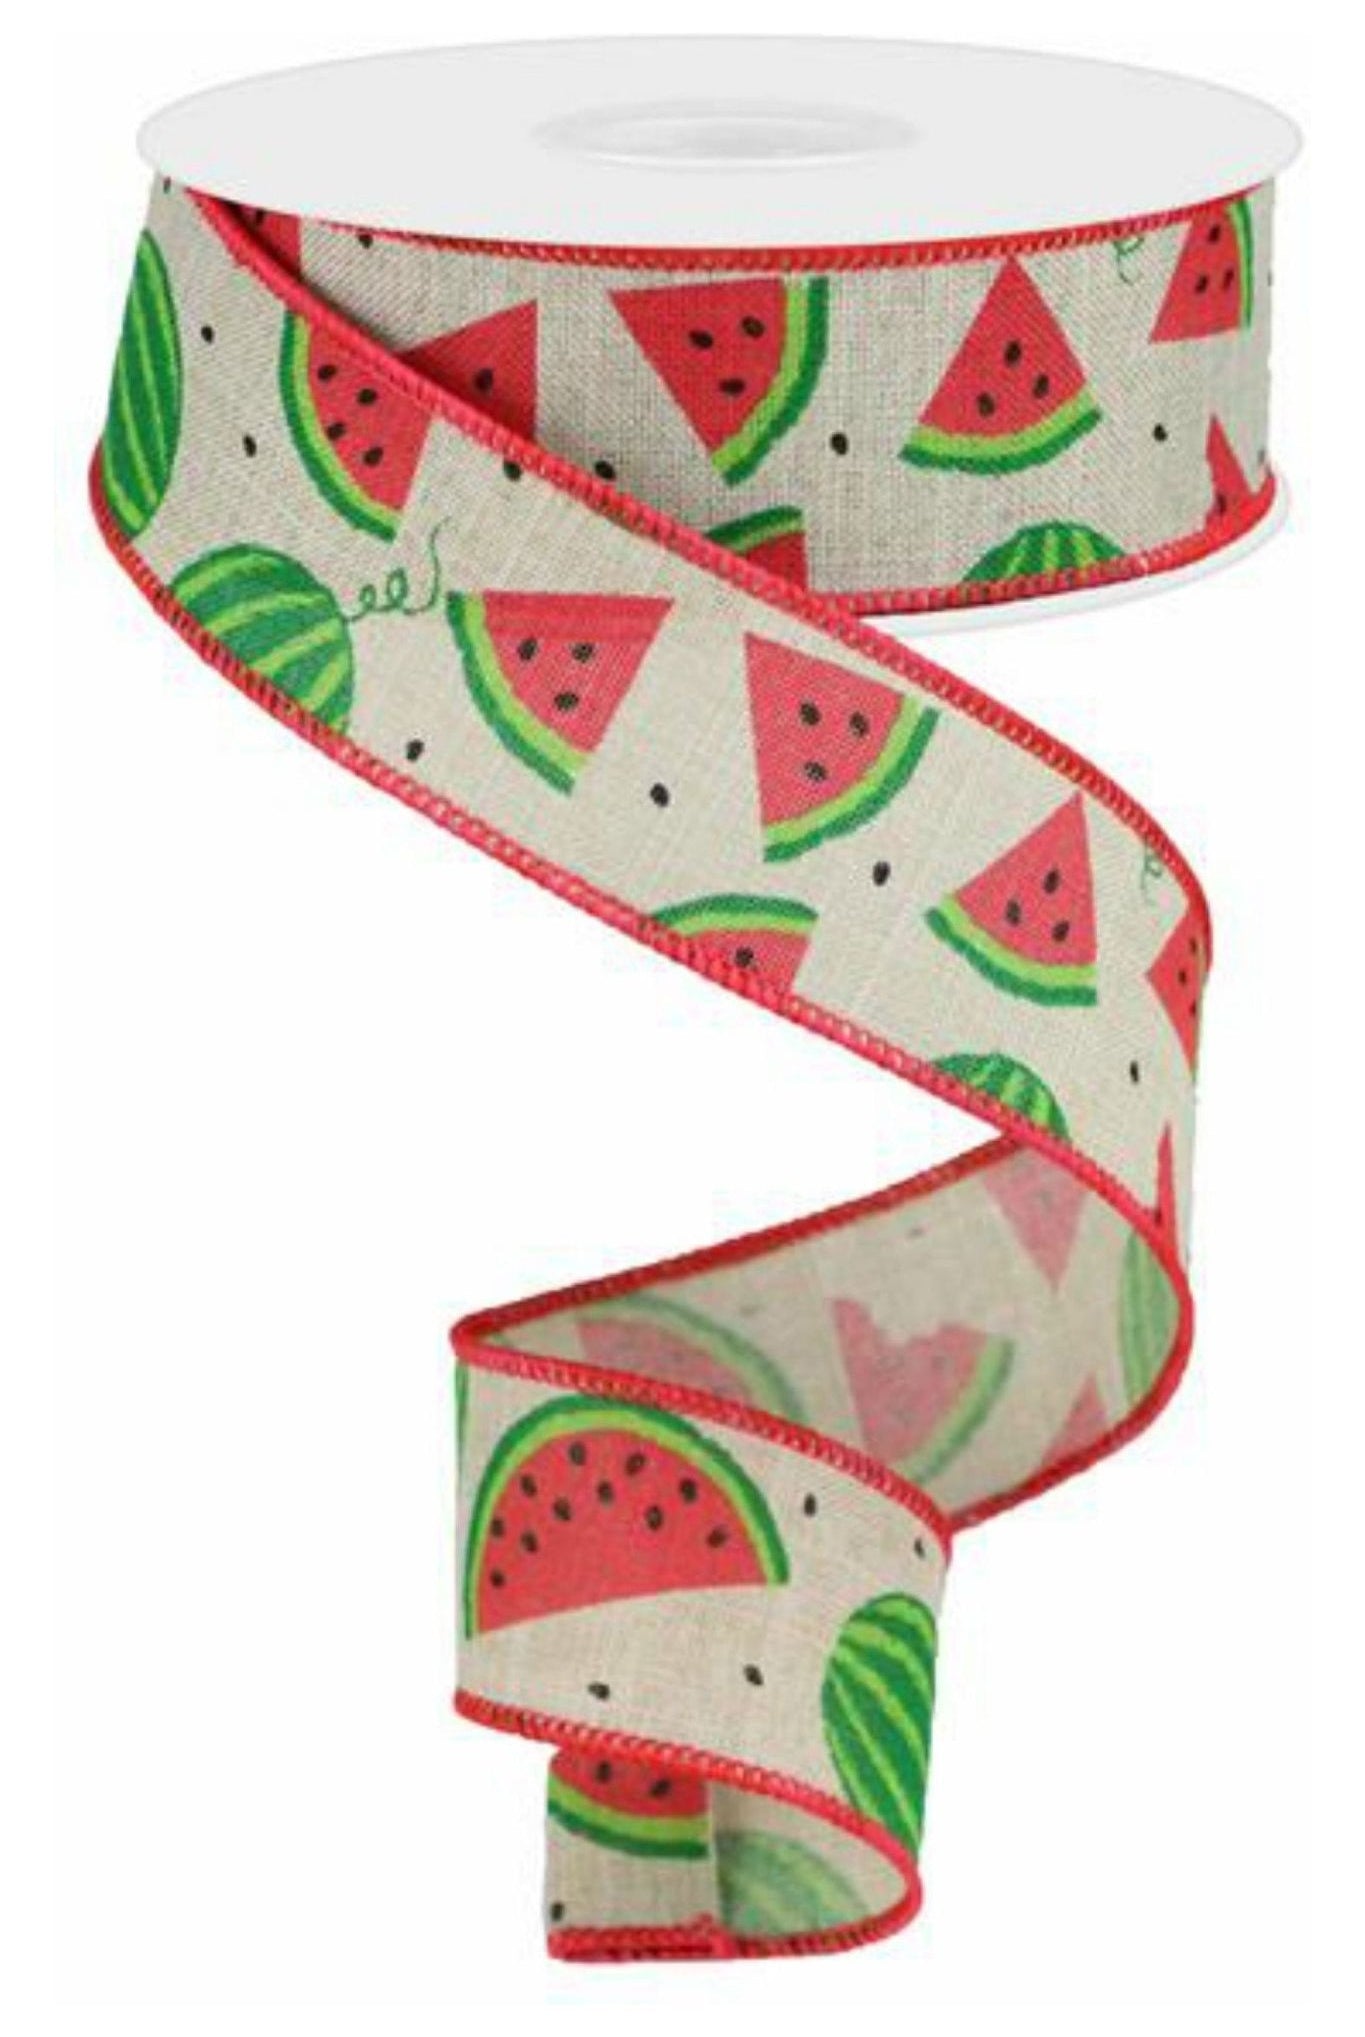 Shop For 1.5" Watermelon Slices Canvas Ribbon: Natural (10 Yards) RG0199118